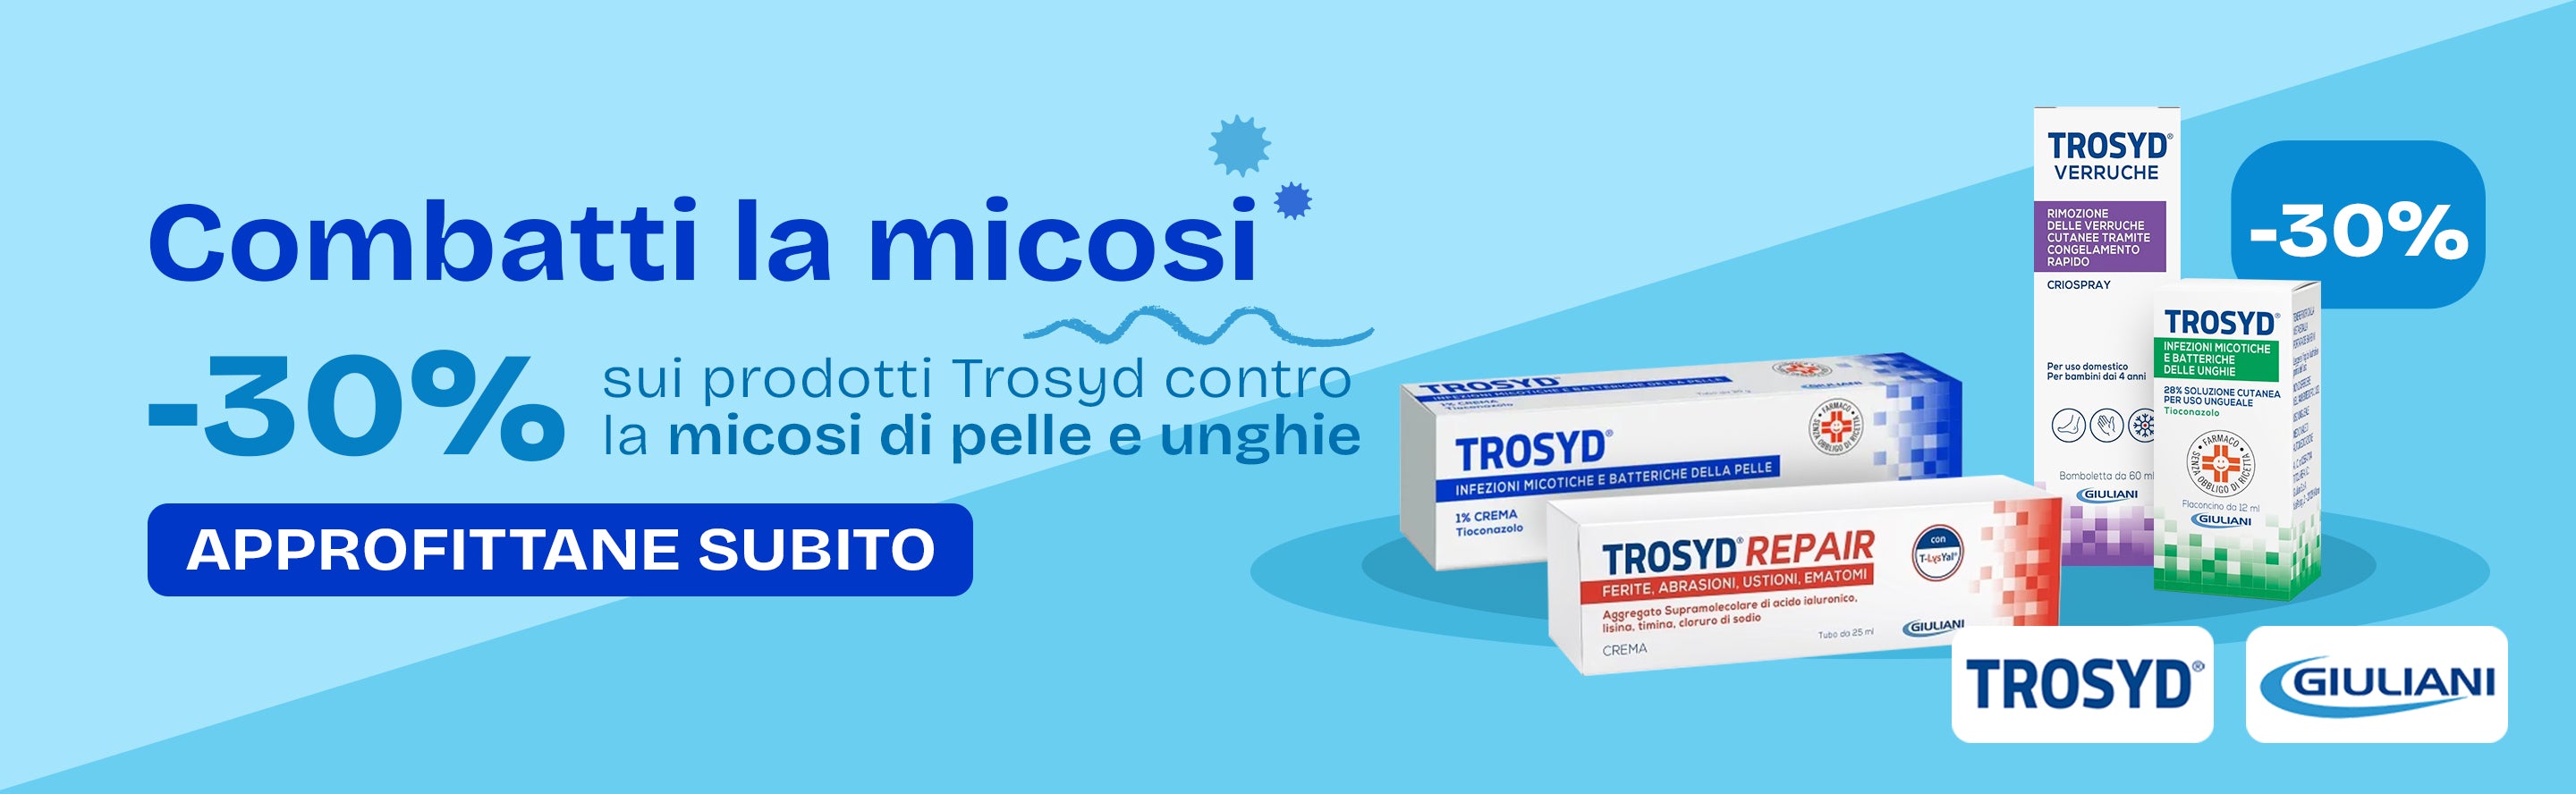 Promo Trosyd -30%